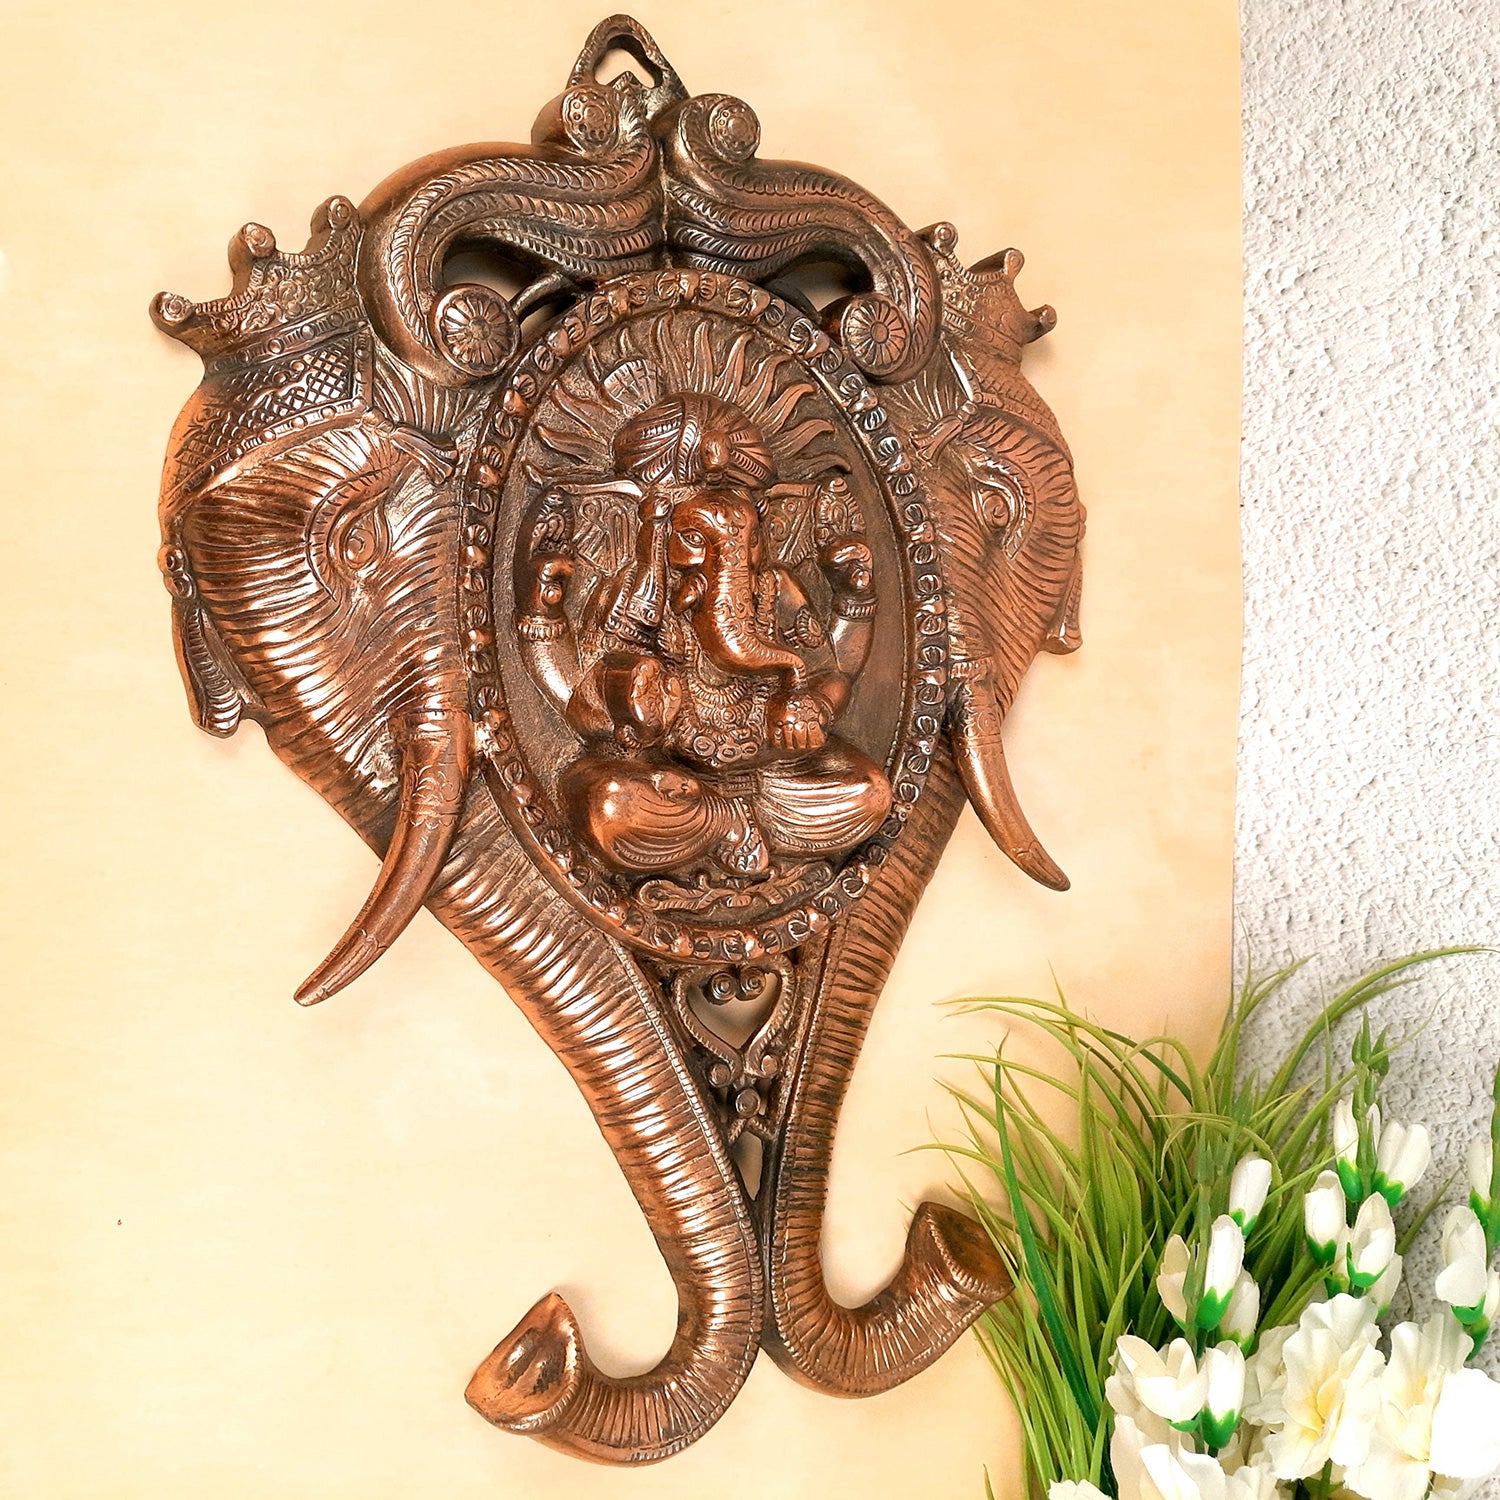 Ganesh Idol Wall Hanging | Lord Ganesha Wall Statue Decor |Religoius & Spiritual Wall Art - For Puja, Home & Entrance Living Room & Gift - 23 Inch - apkamart